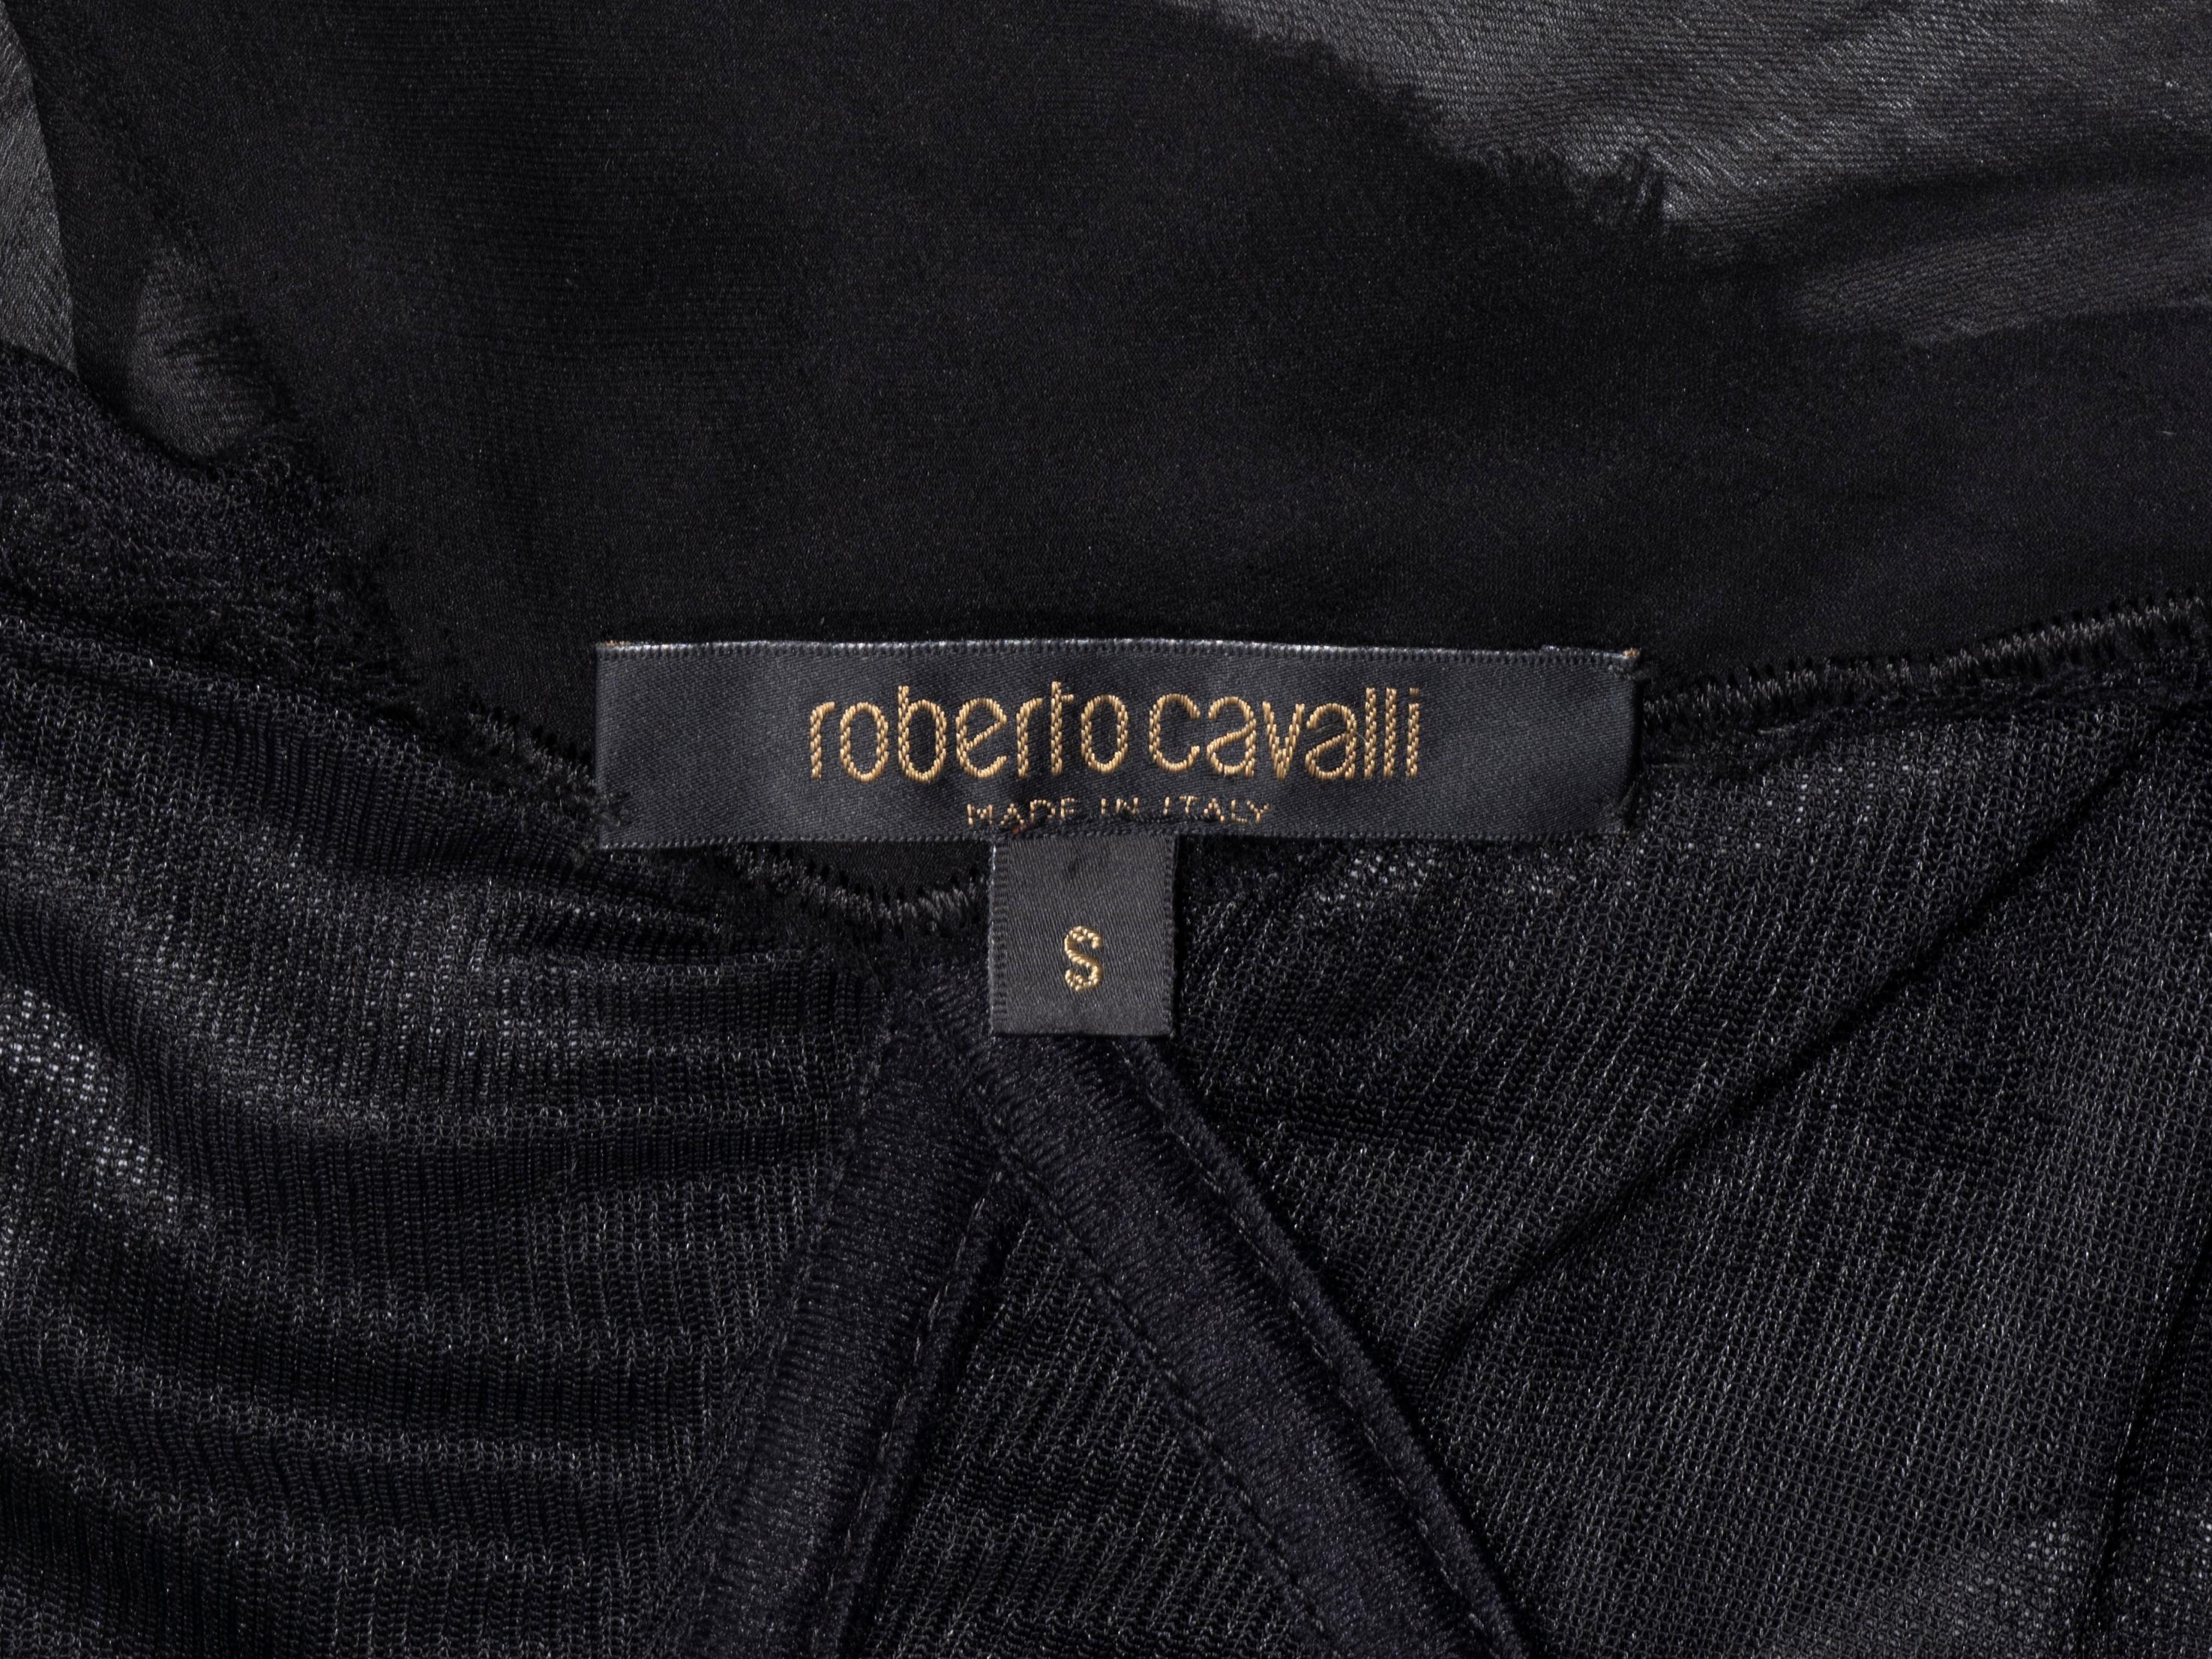 Roberto Cavalli black shredded silk strapless evening dress with train, fw 2001 For Sale 4